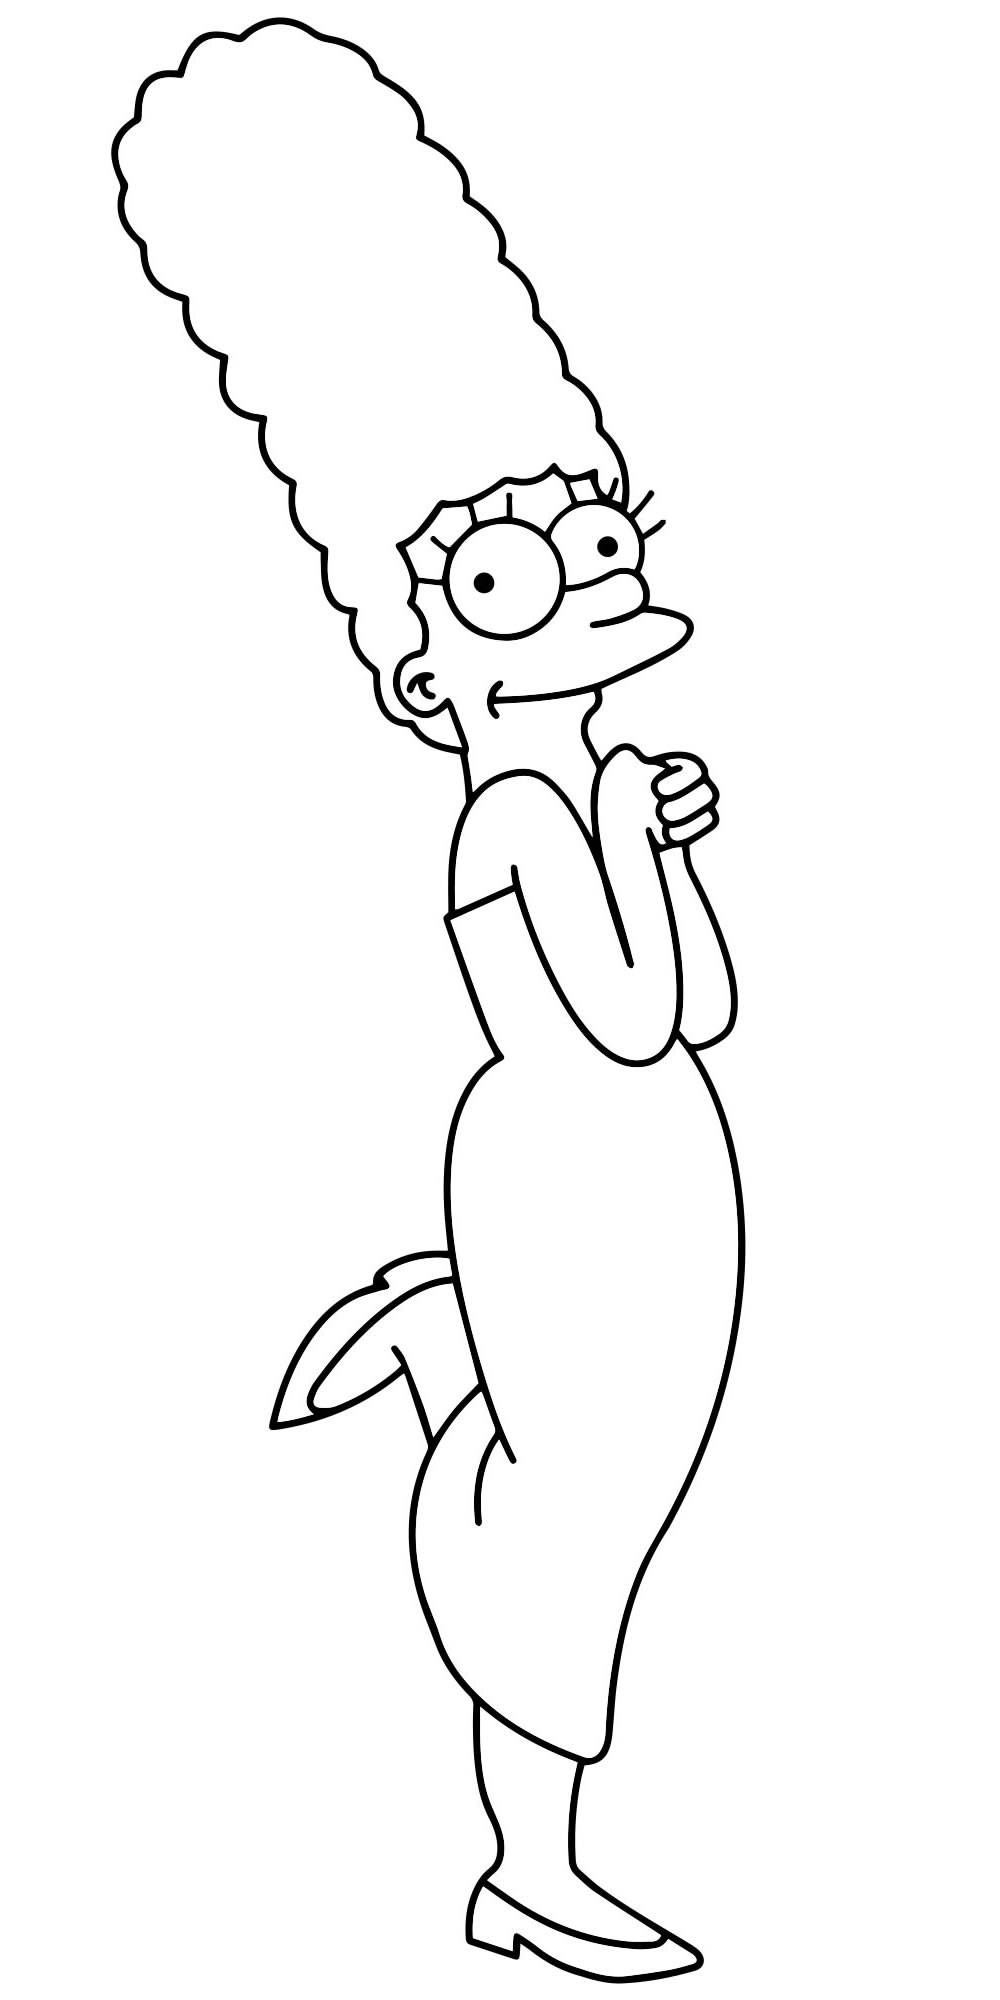 Мардж Симпсон раскраска для детей